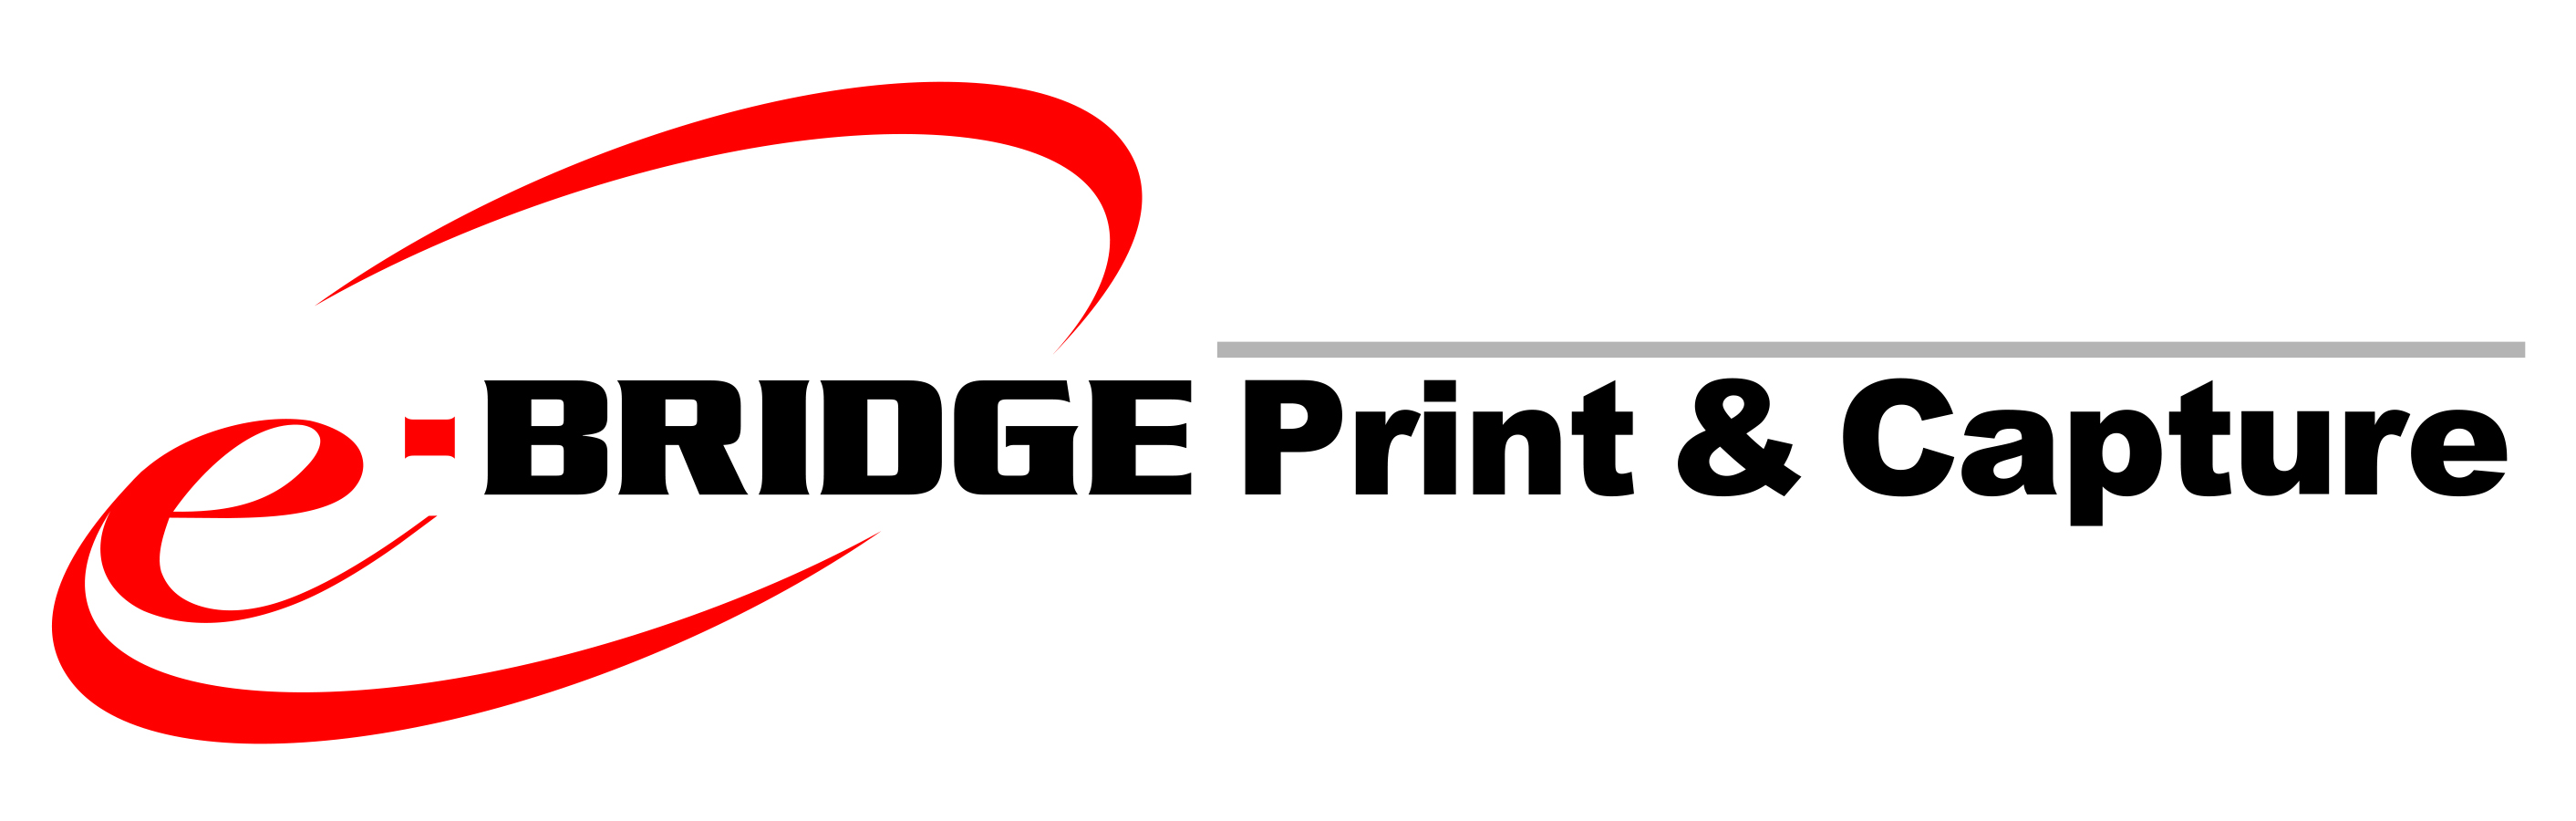 e BRIDGE Print Capture logo L